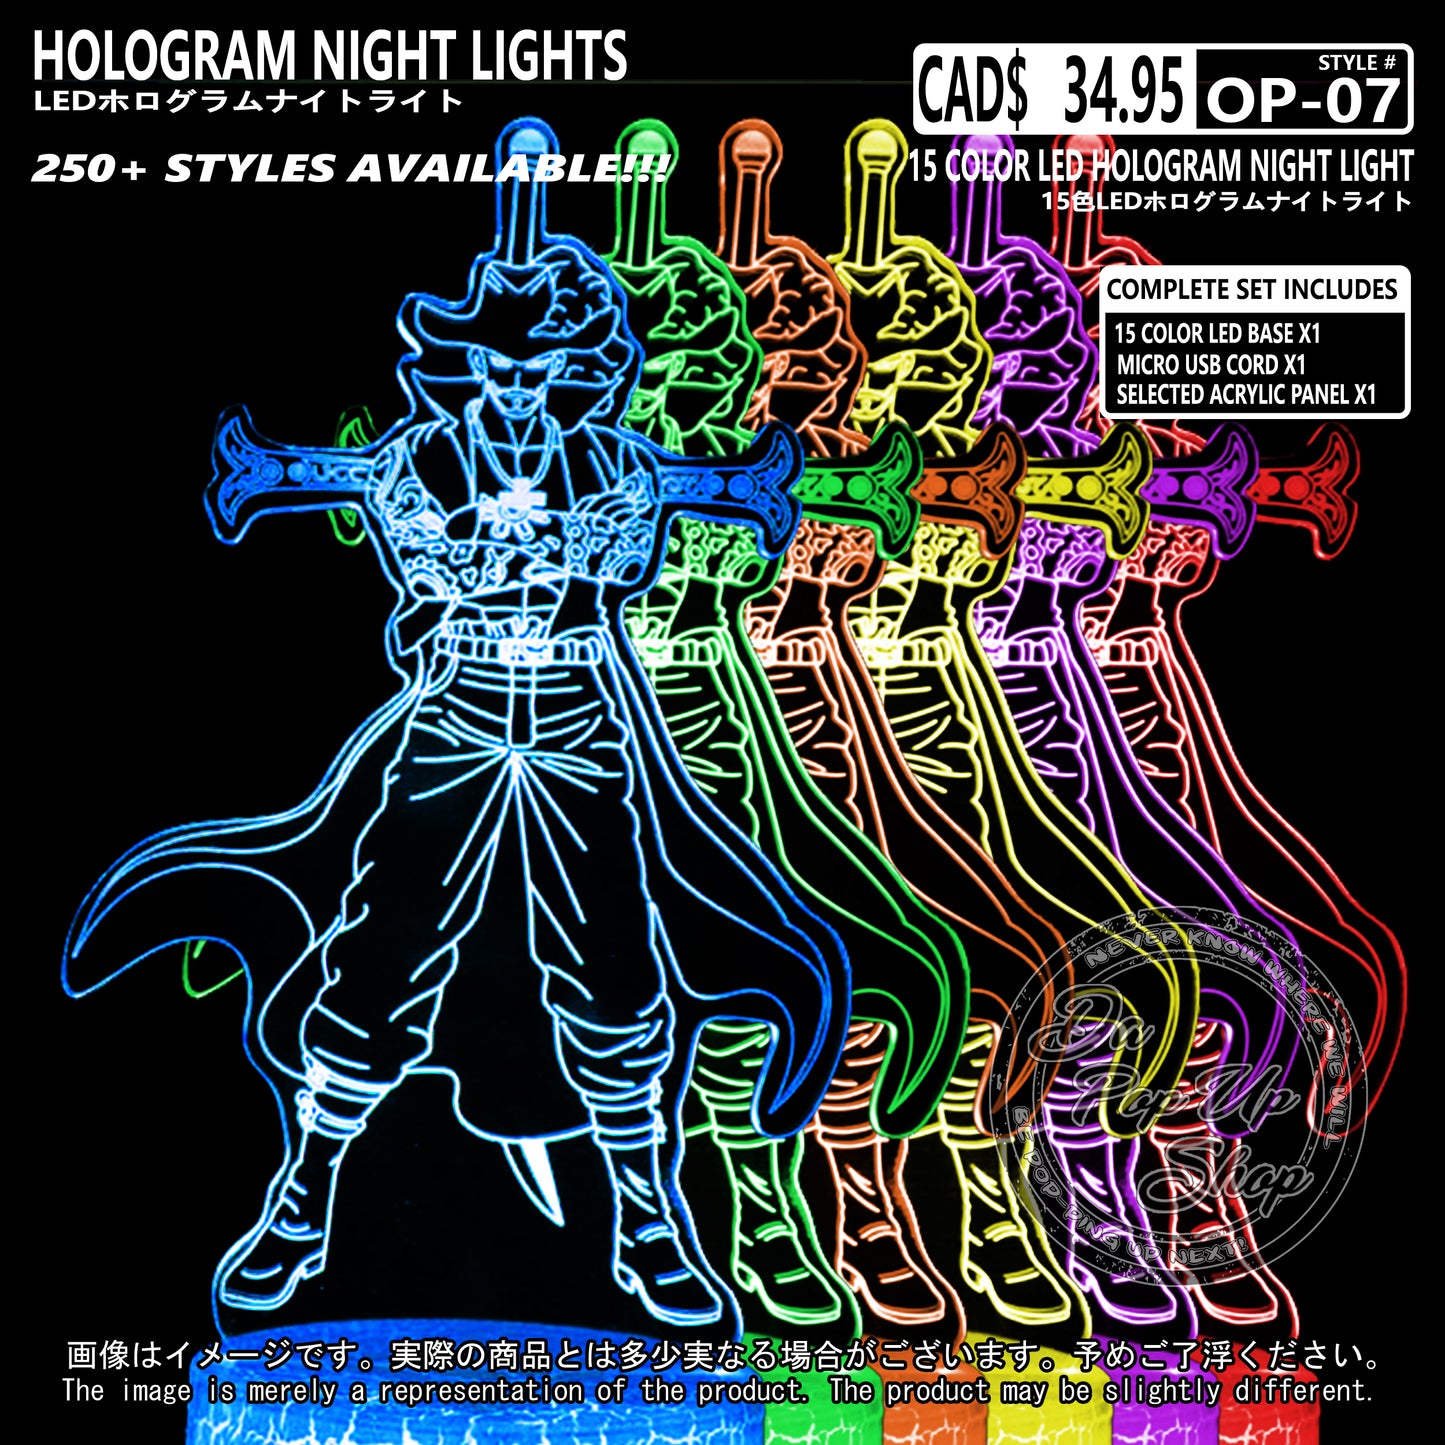 (OP-07) One Piece Hologram LED Night Light